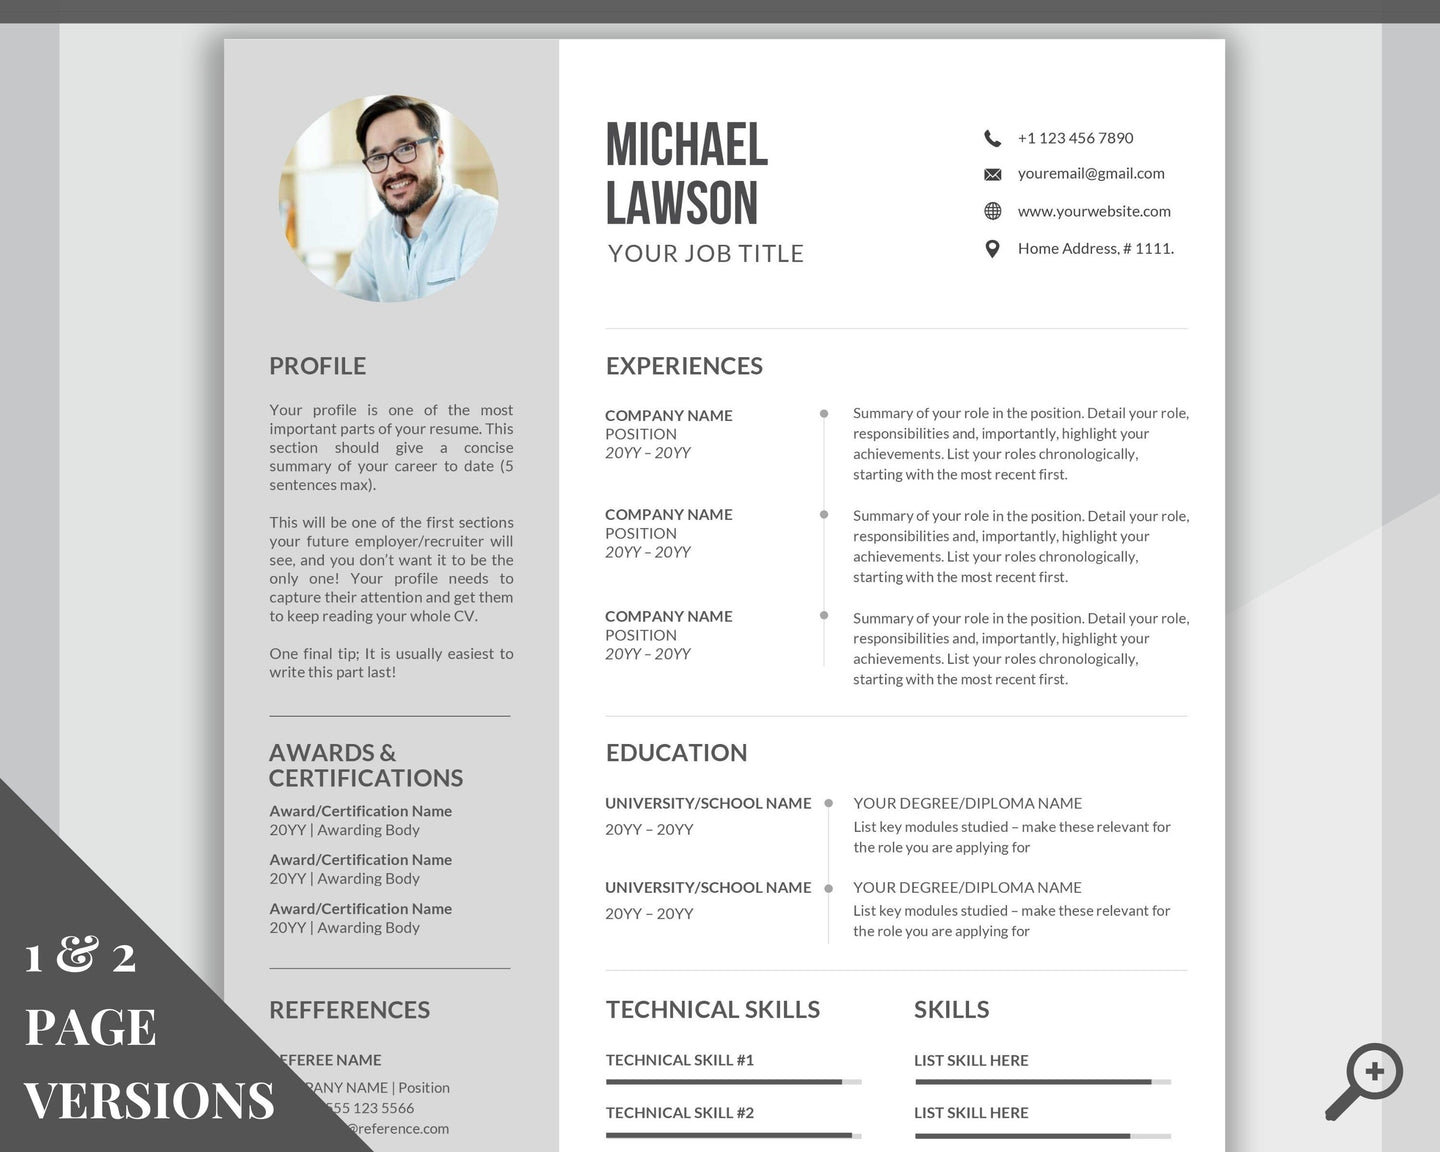 Professional Resume Template Word. CV Template Professional, Modern Executive Resume Template, Clean, Minimalist Resume, Free Docs Bundle | Style 4